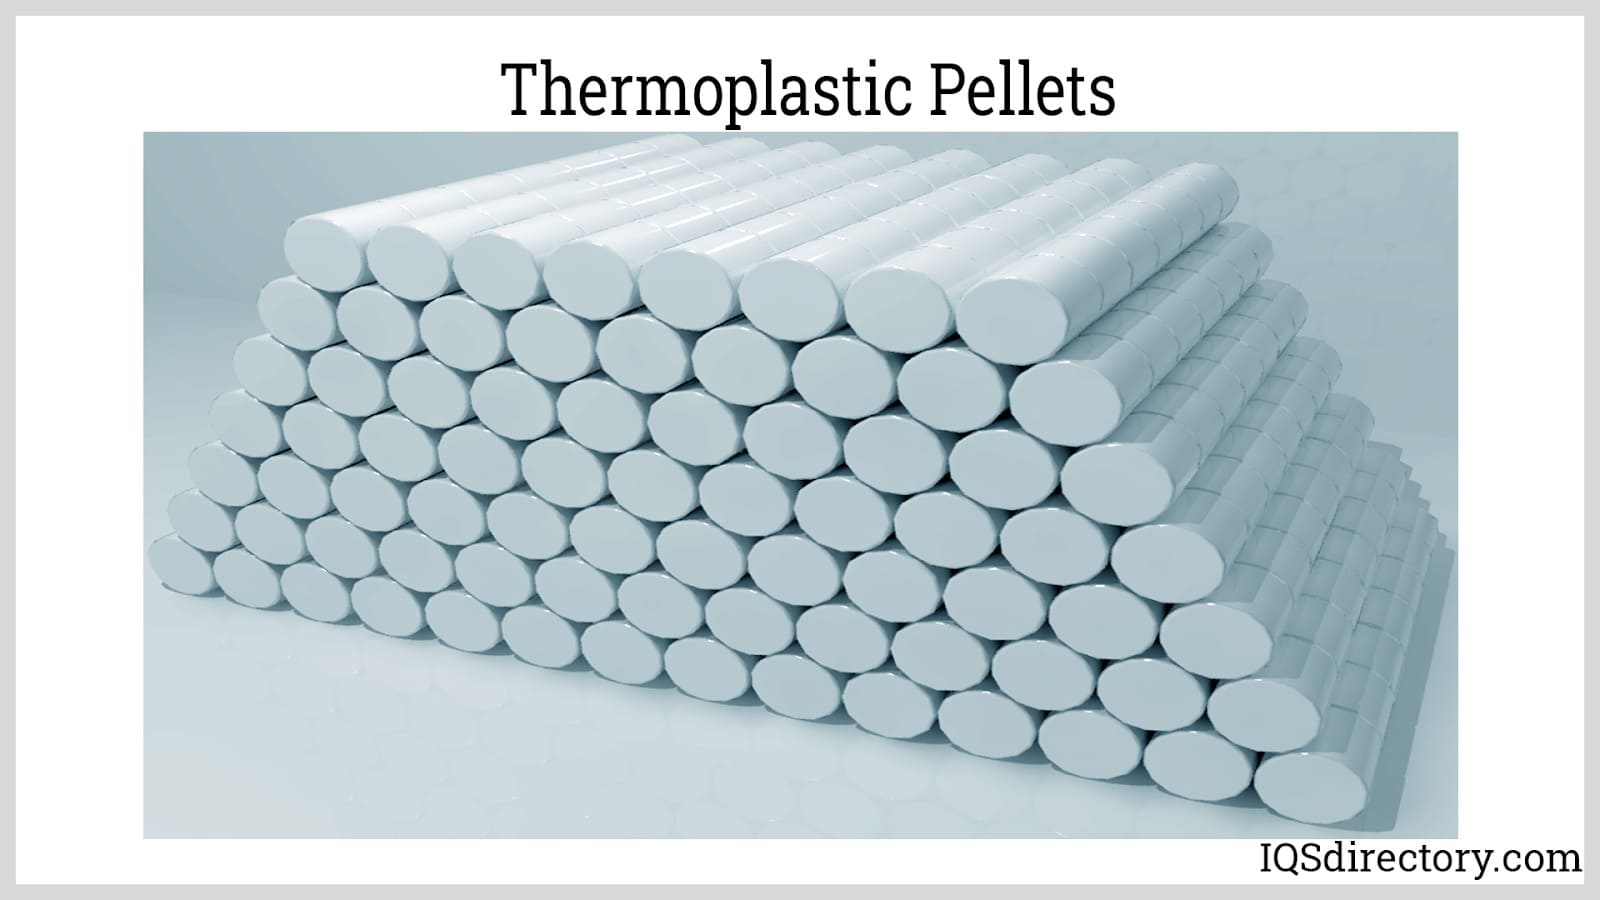 Thermoplastic Pellets